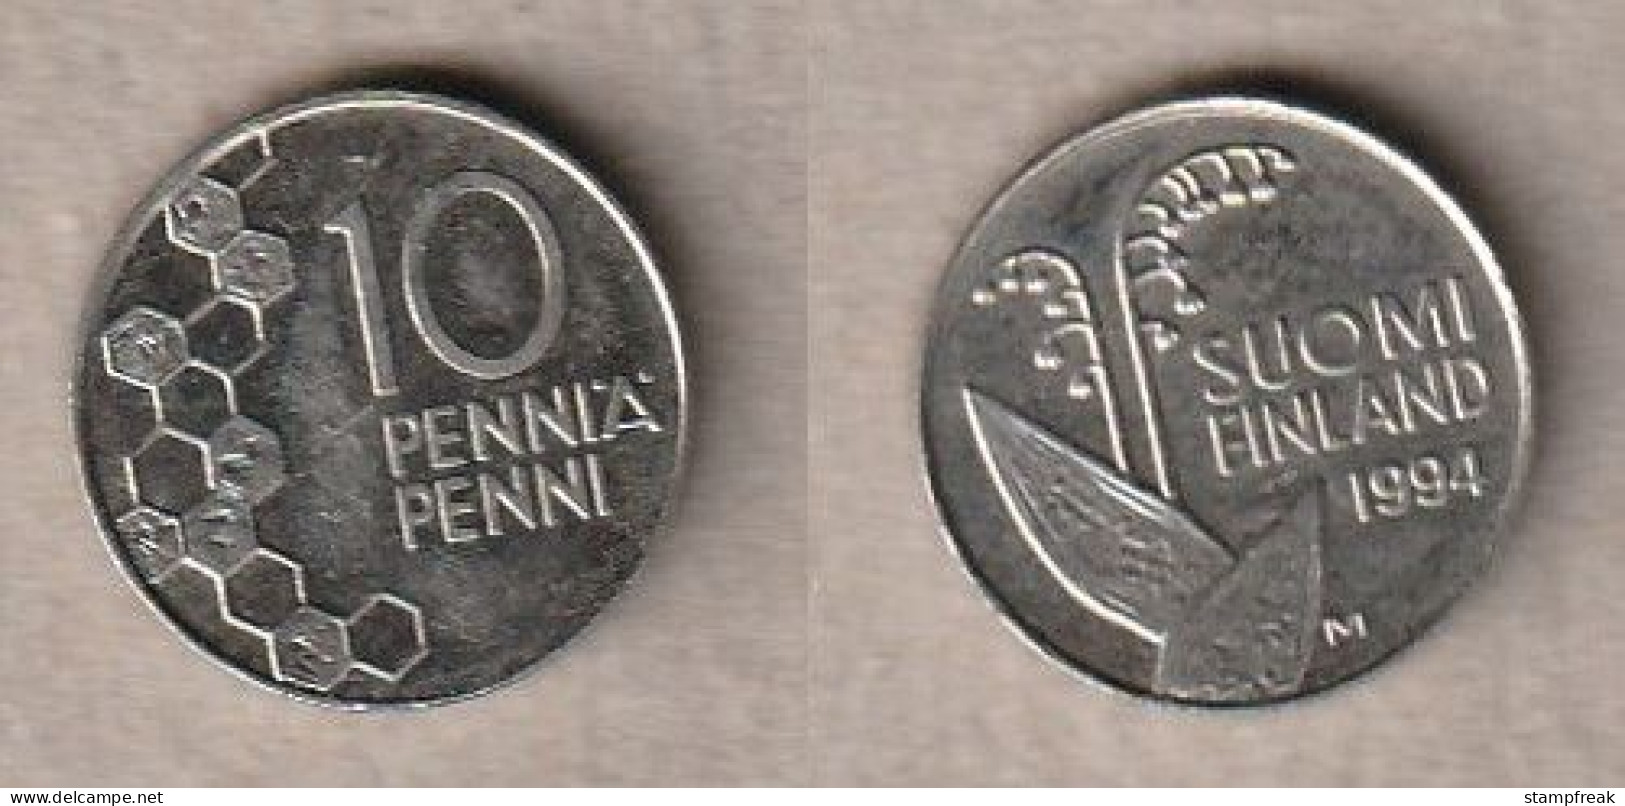 02299) Finnland, 10 Penniä 1994 - Finlande